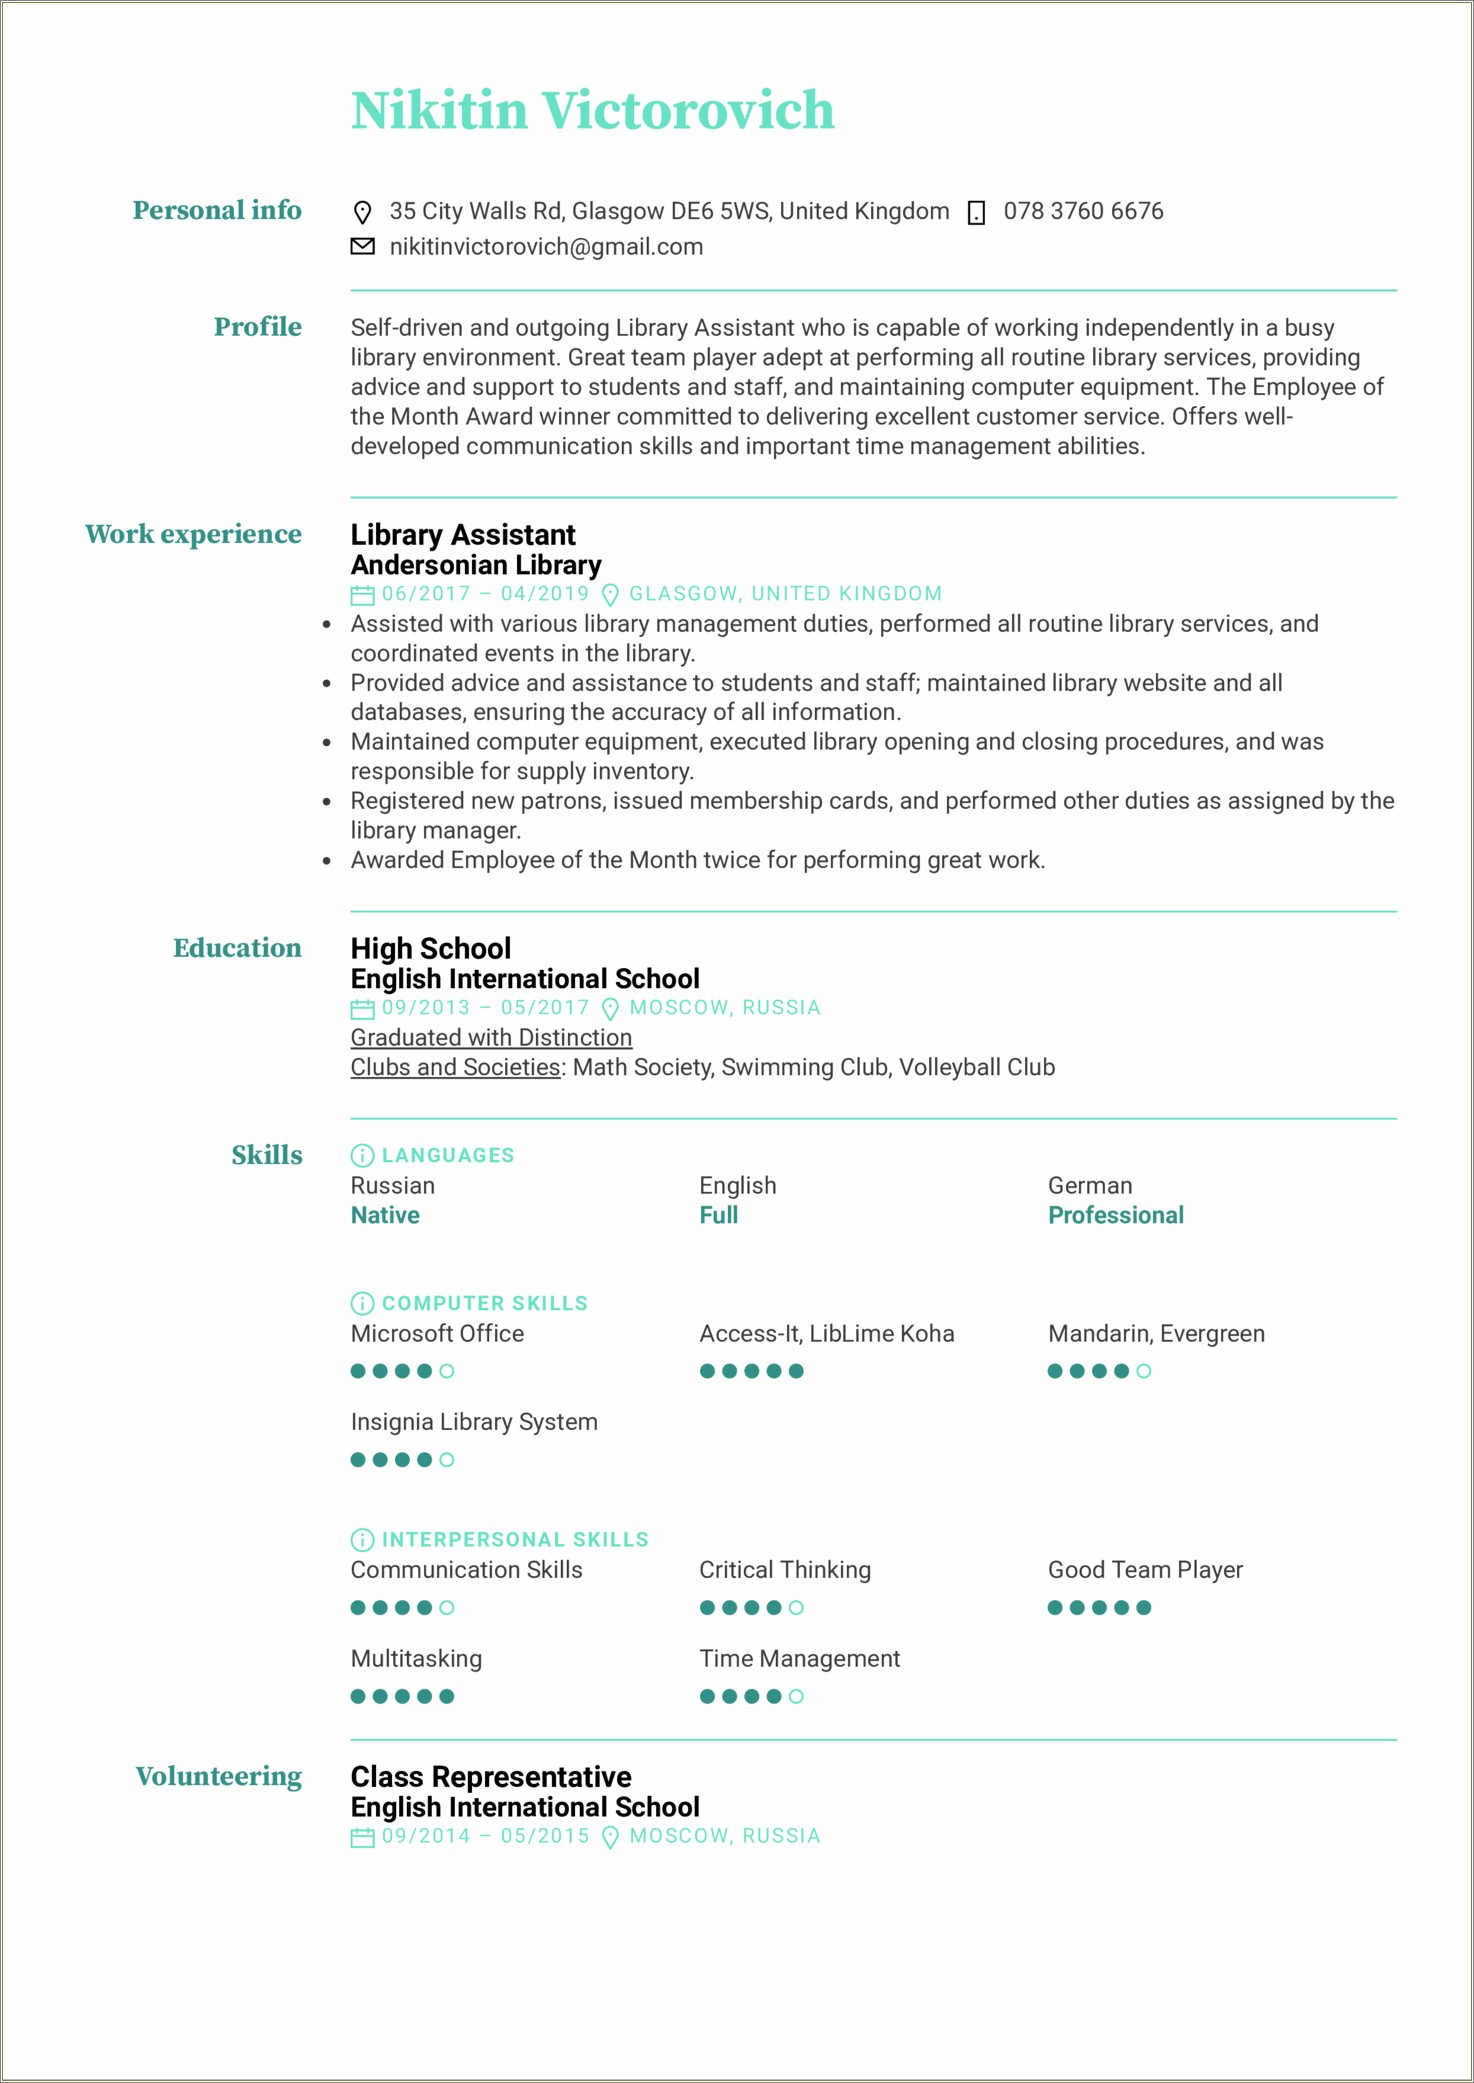 Computer Attendant Job Description For Resume